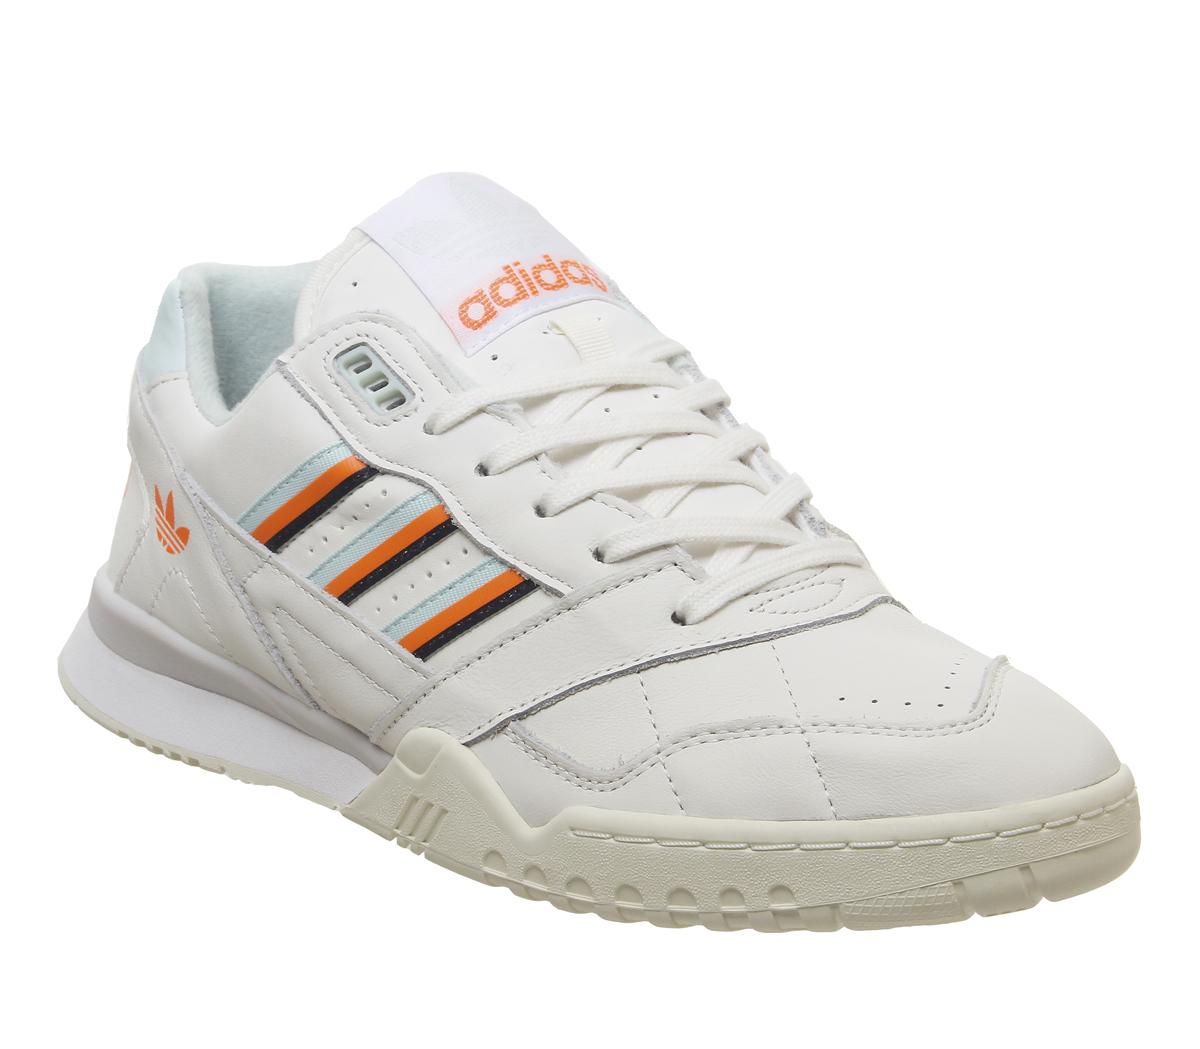 adidas white and orange trainers